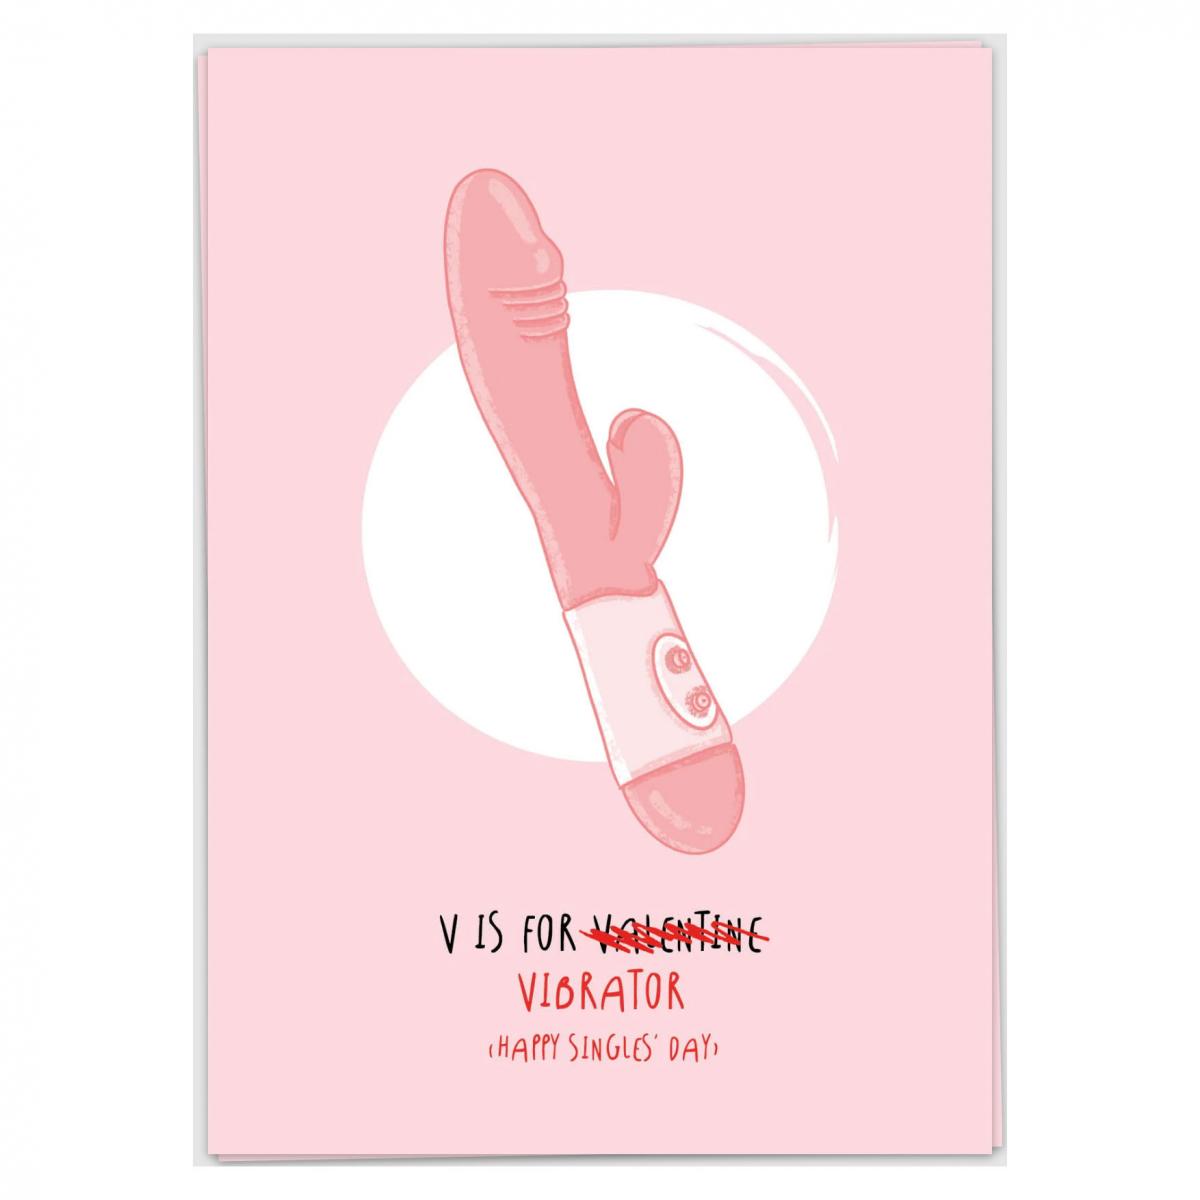 'V is for vibrator'